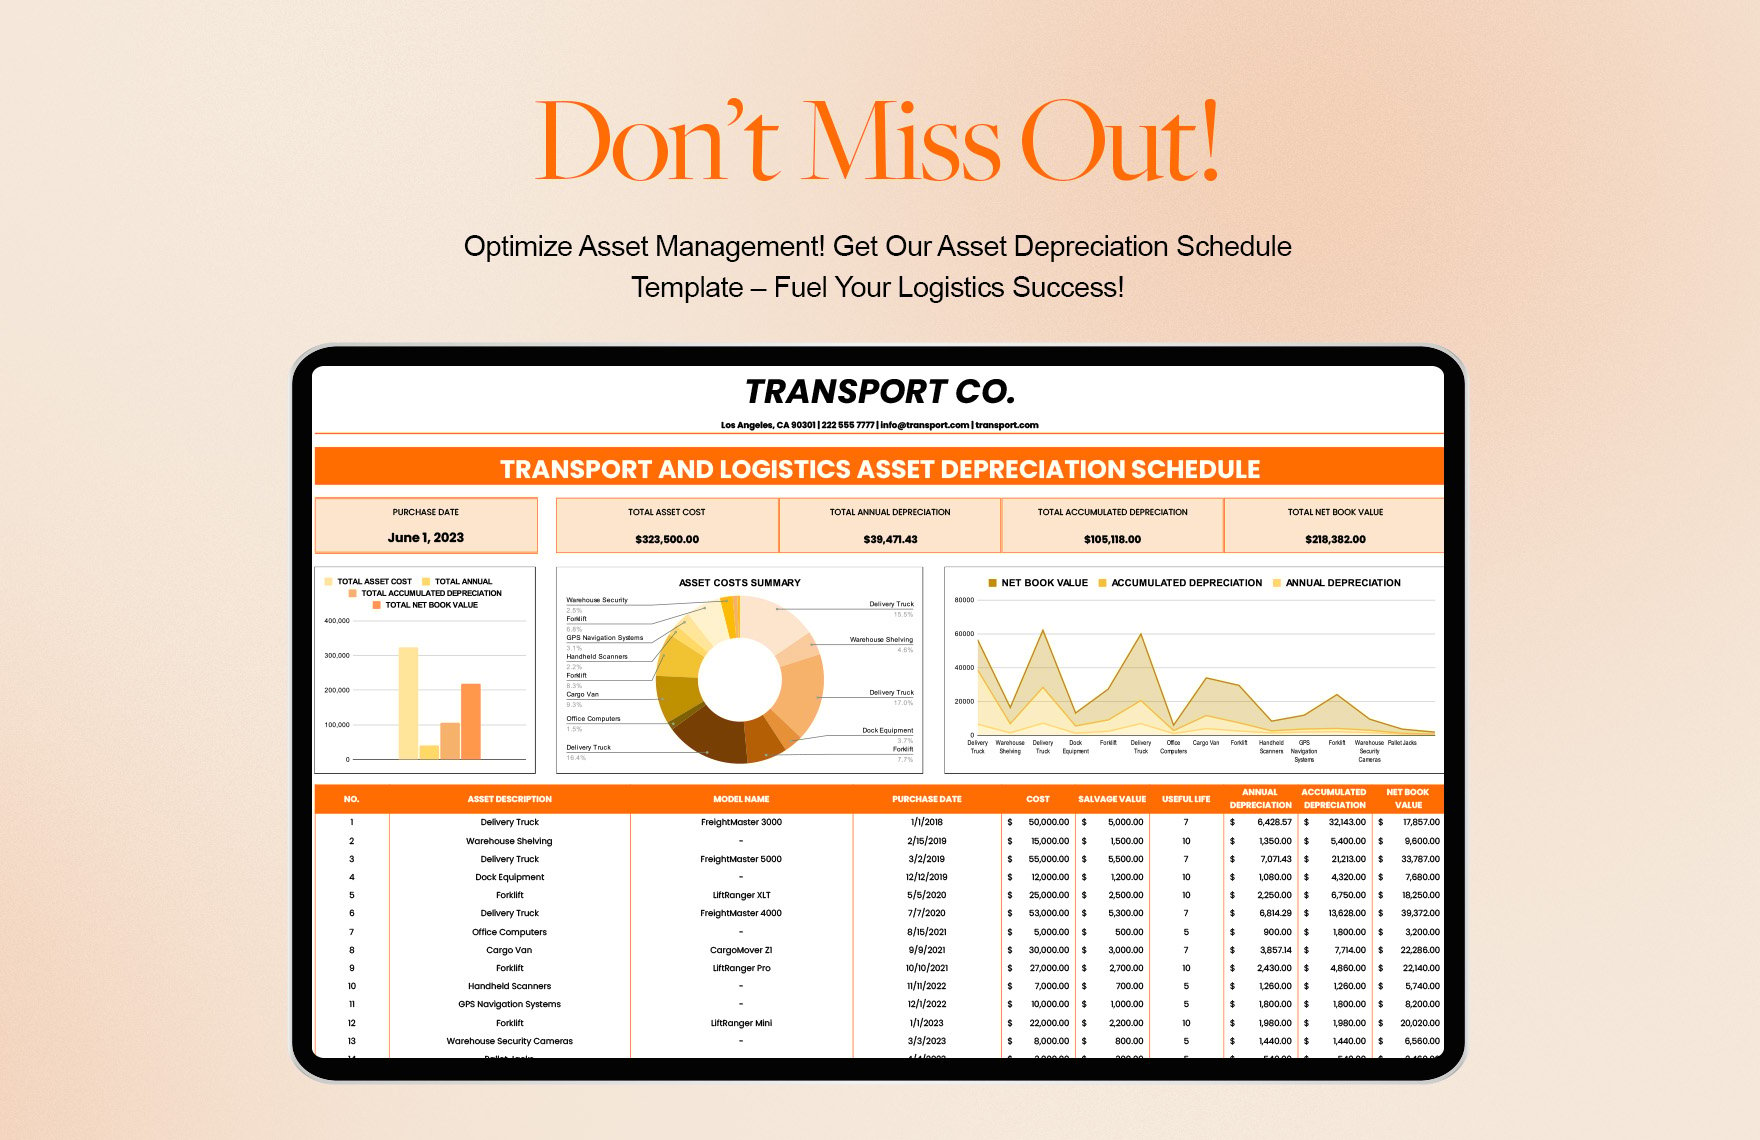 Transport and Logistics Asset Depreciation Schedule Template